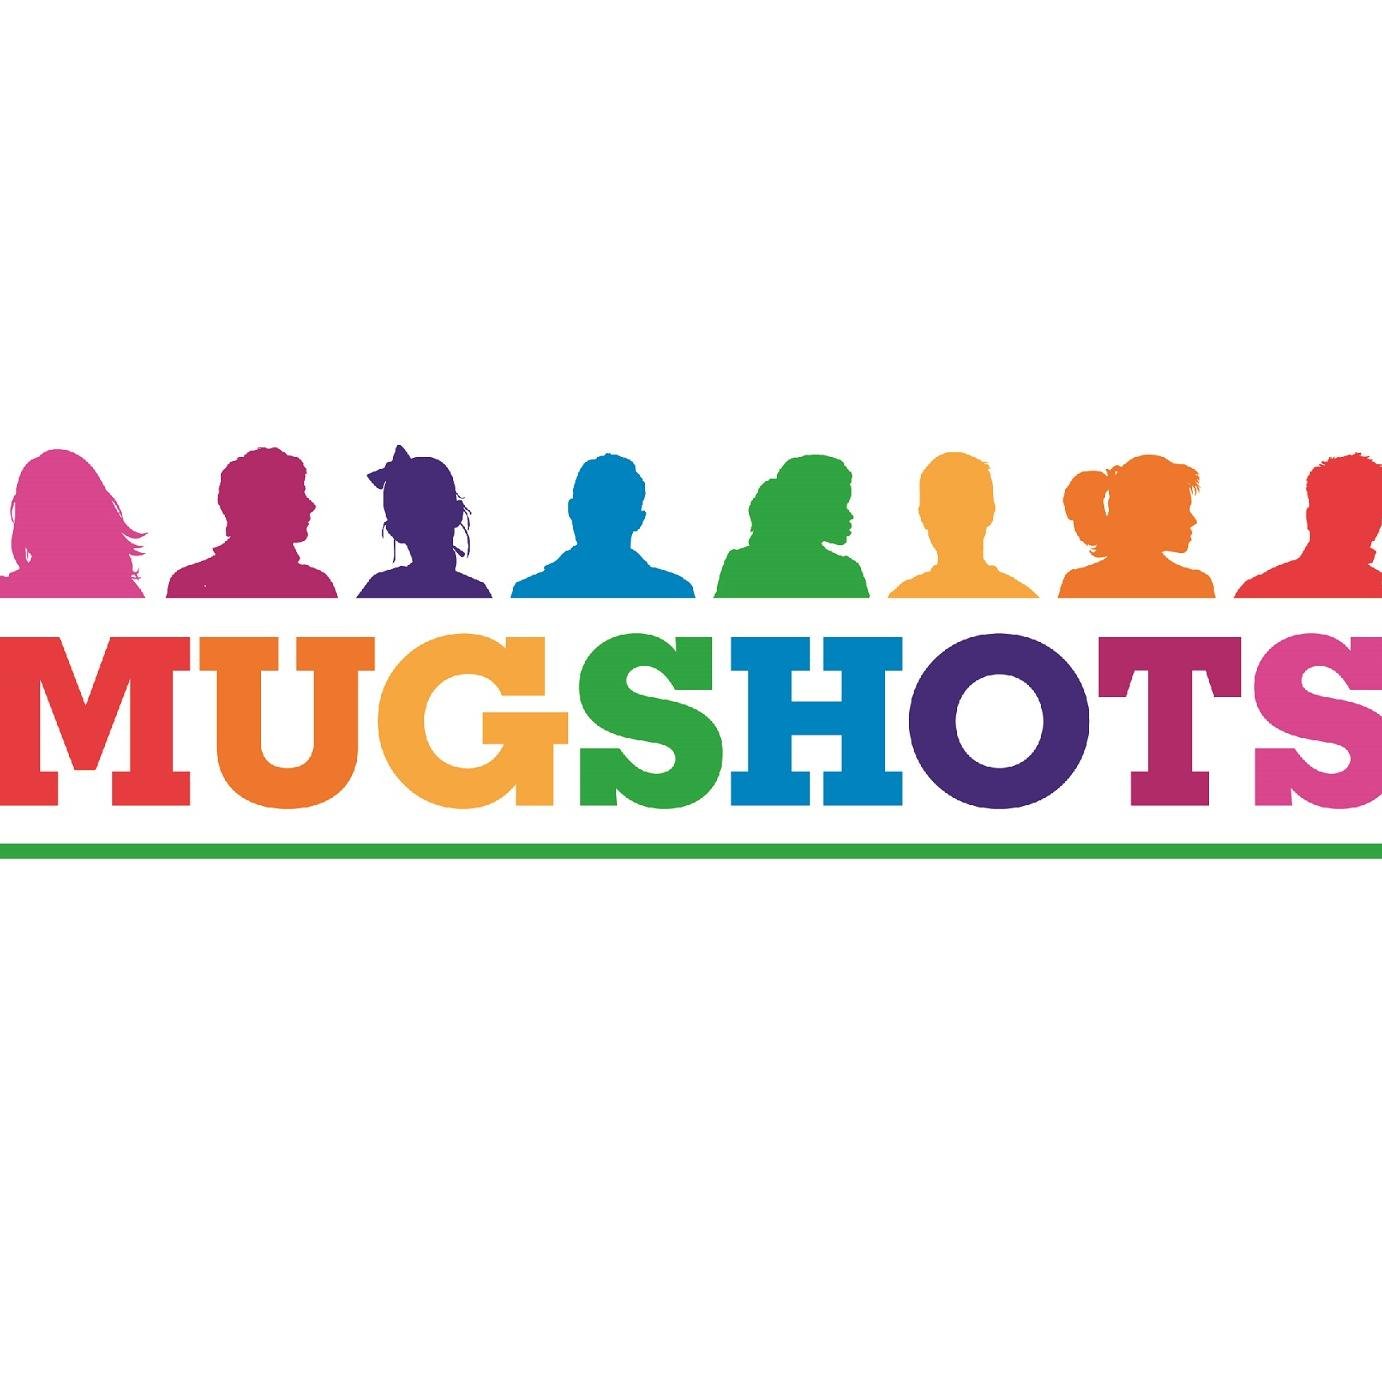 Mugshots